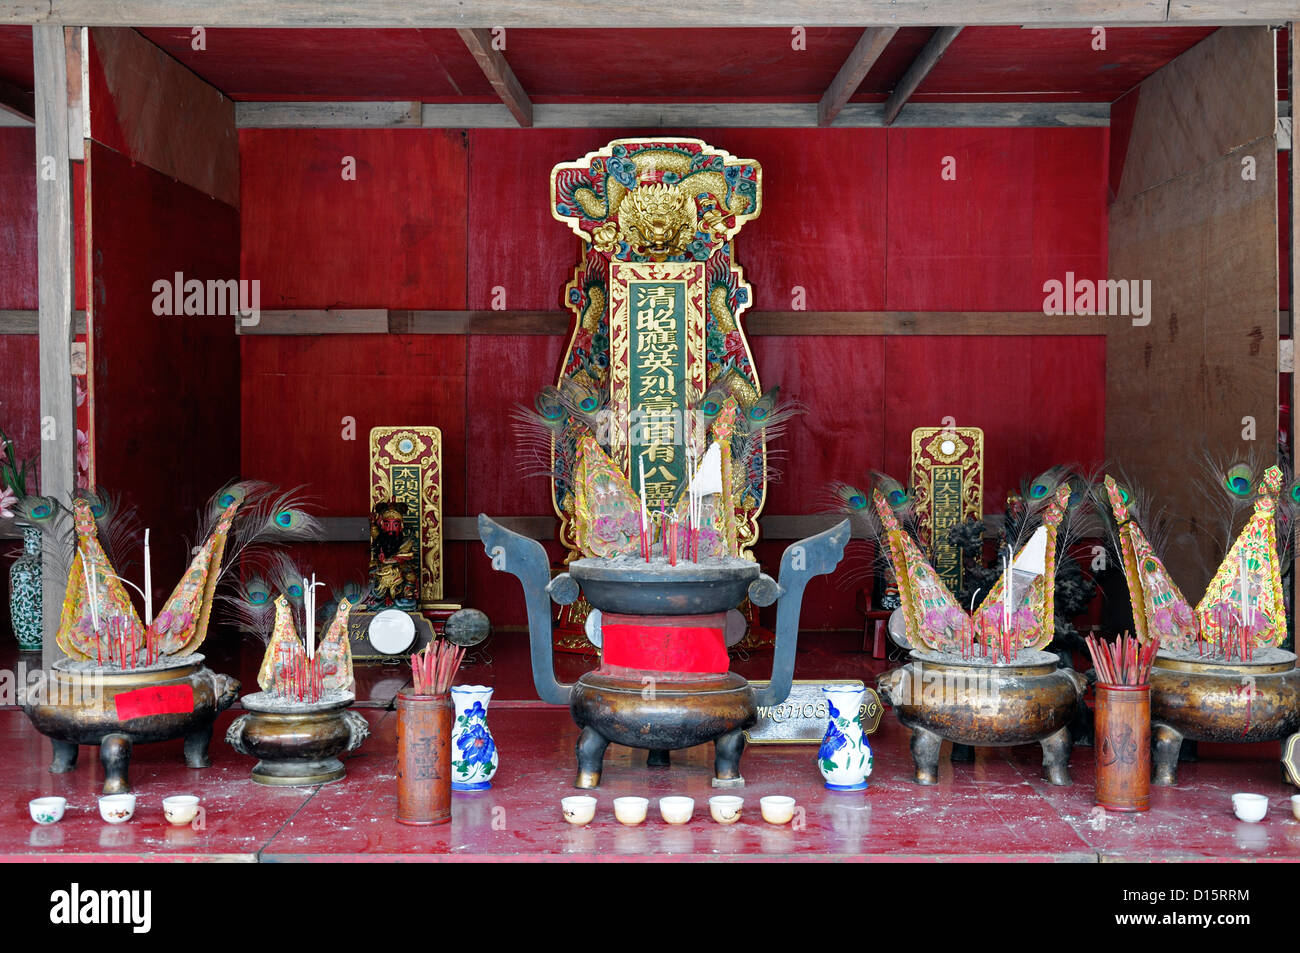 jael aeng beal chinese temple shrine Bang Rak bangkok thailand taksin station Stock Photo